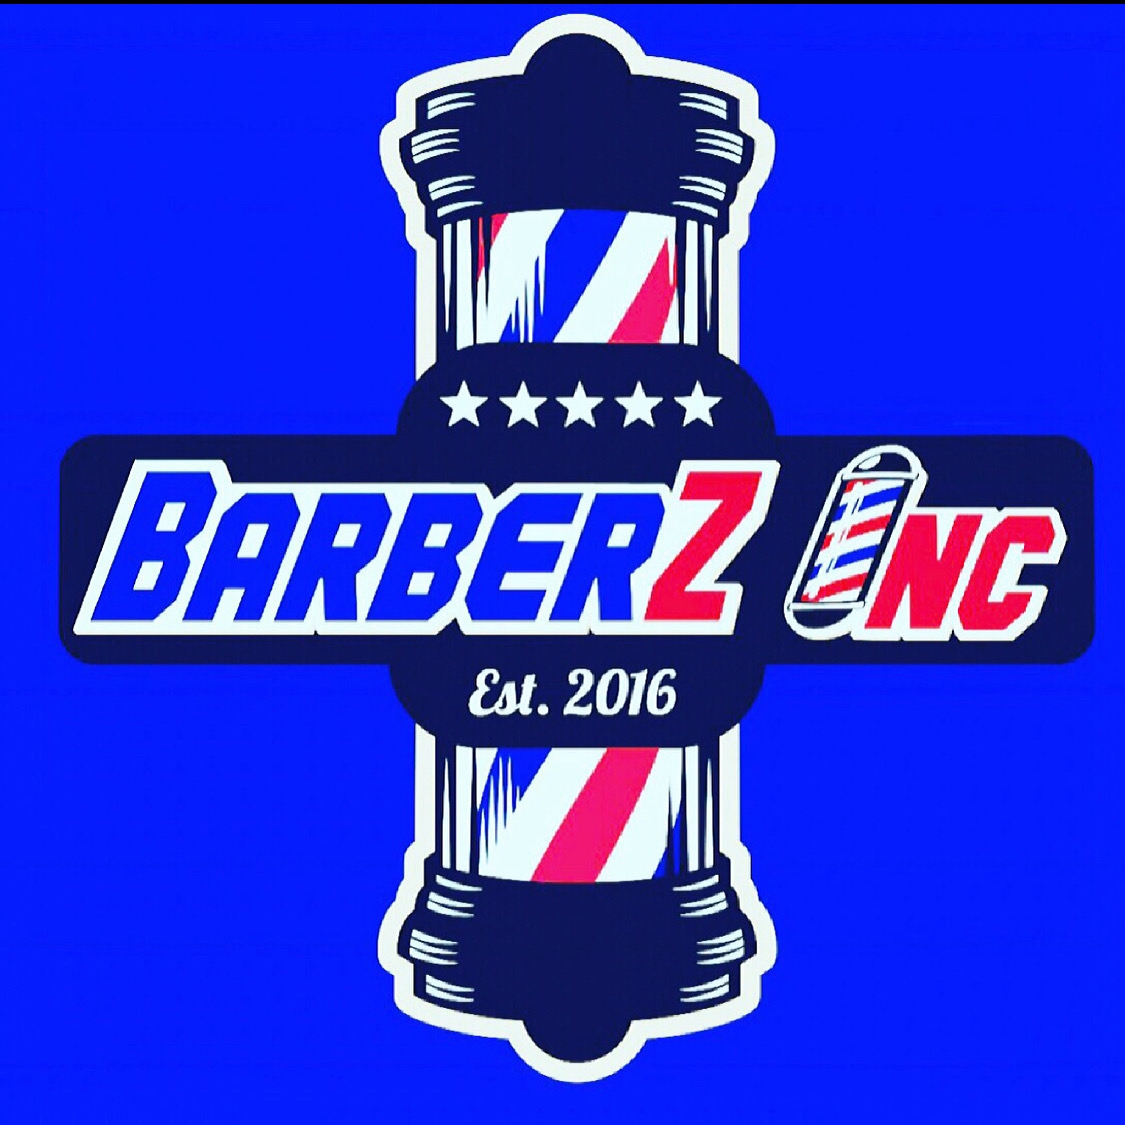 Barberz Inc. 609C Beverly Rancocas Rd, Willingboro New Jersey 08046